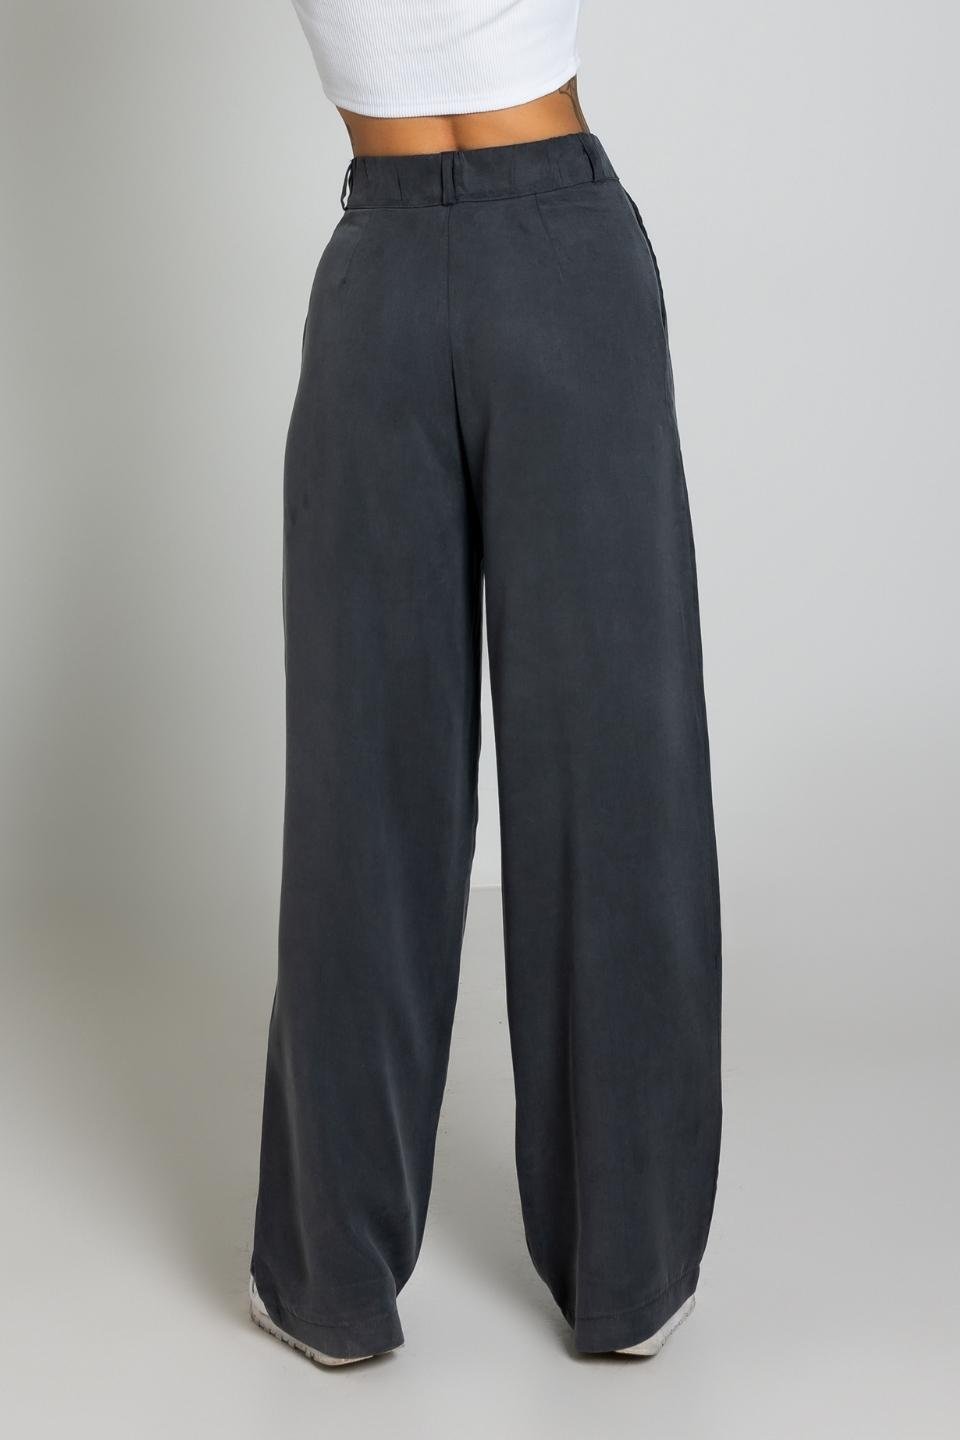 Spodnie garniturowe damskie GARCON TALL - grafit - Chiara Wear